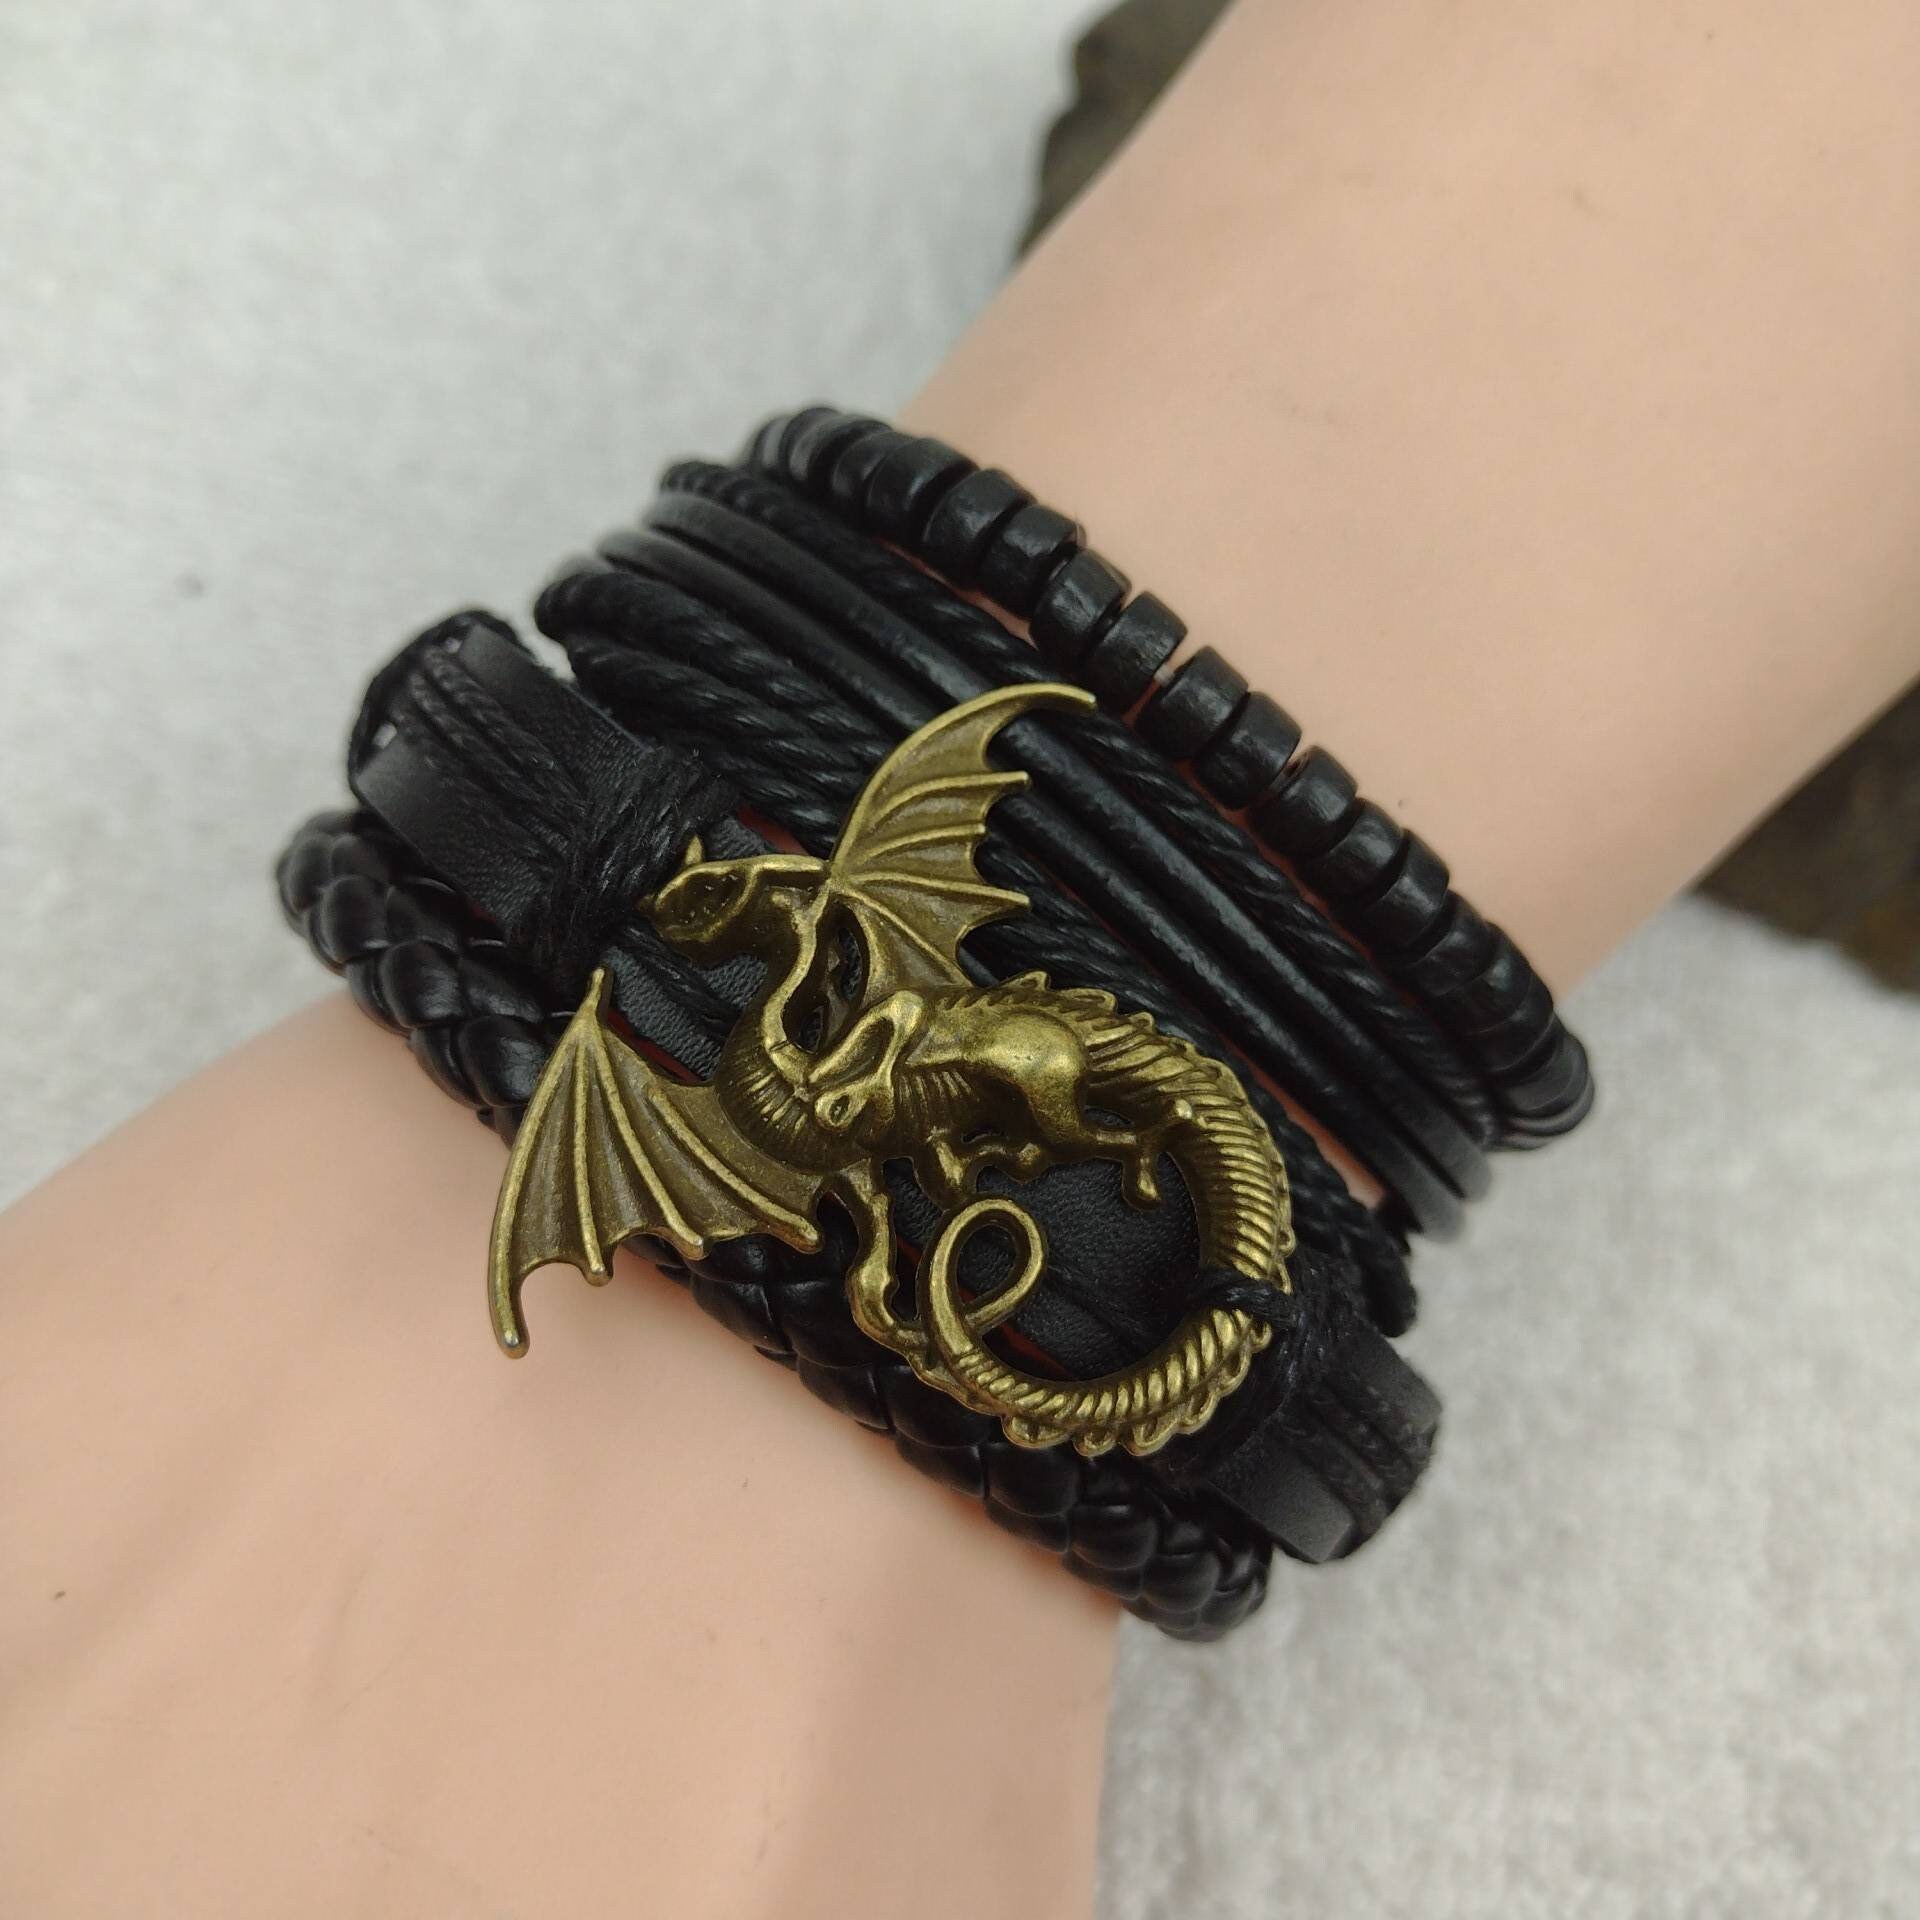 DRAGON BRACELET, Dragon Scale Charm Bracelet, Dragon Gift for Her